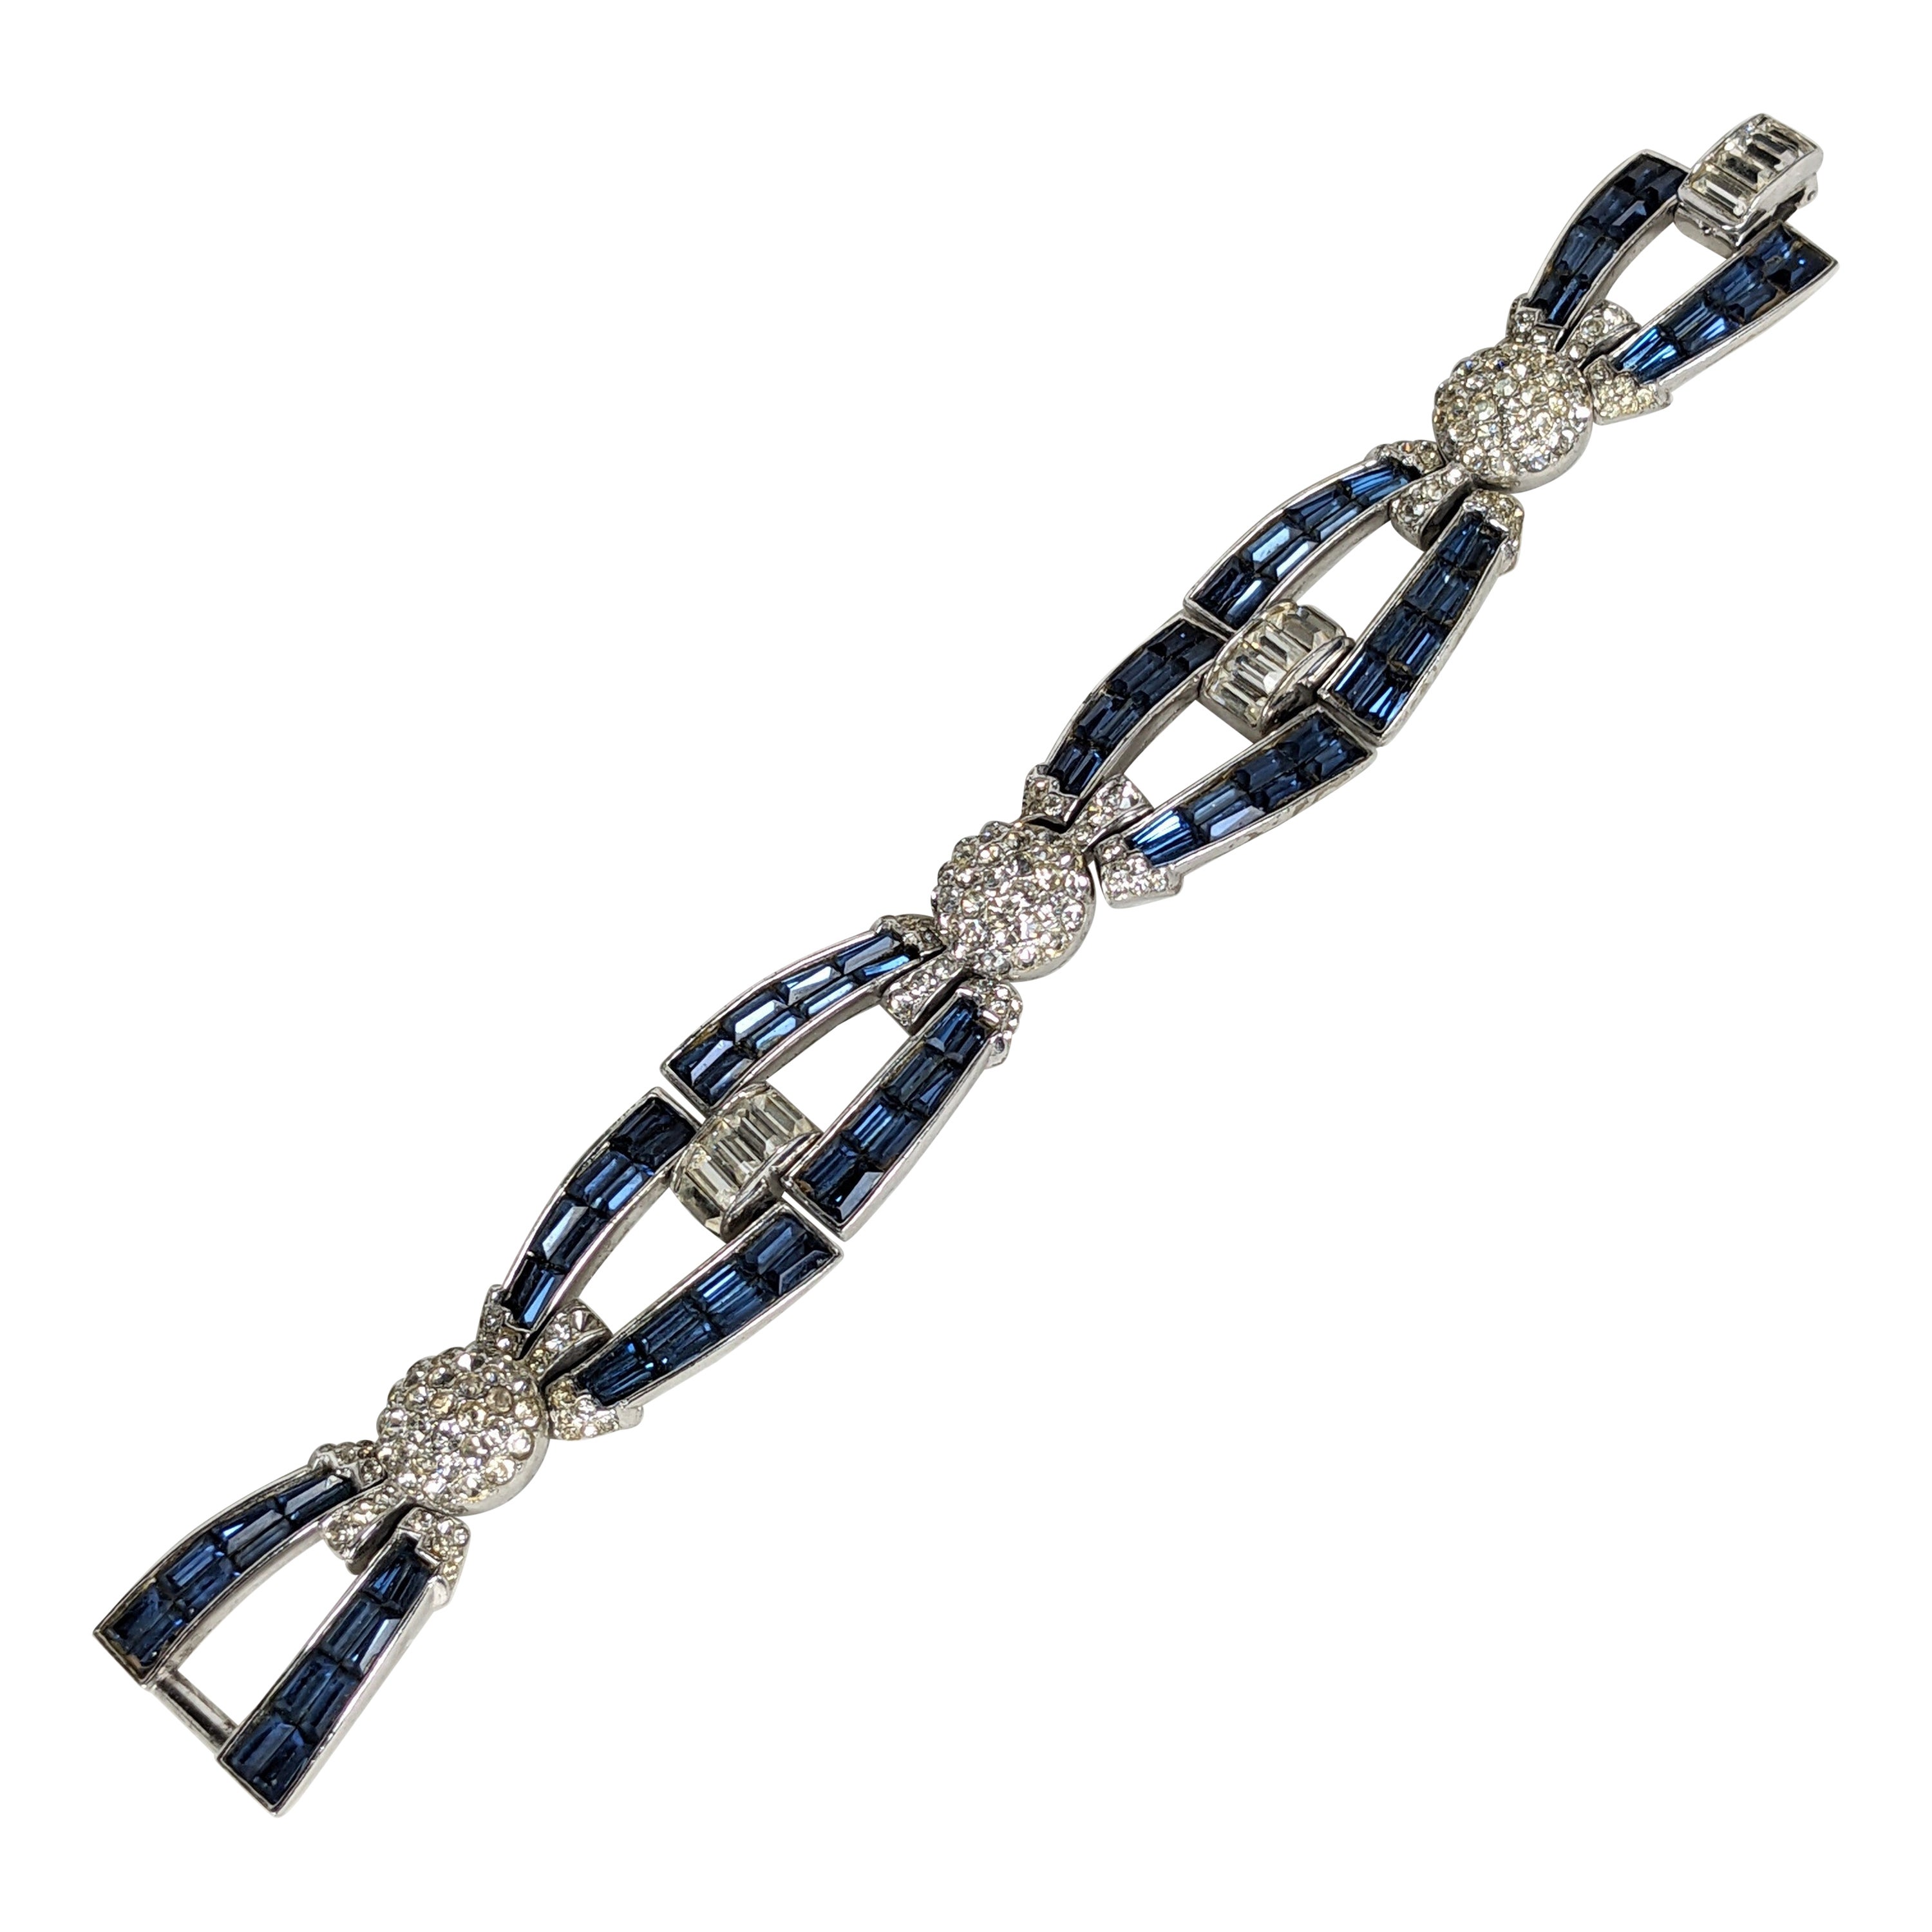  Marcel Boucher Art Deco Baguette Link Bracelet For Sale